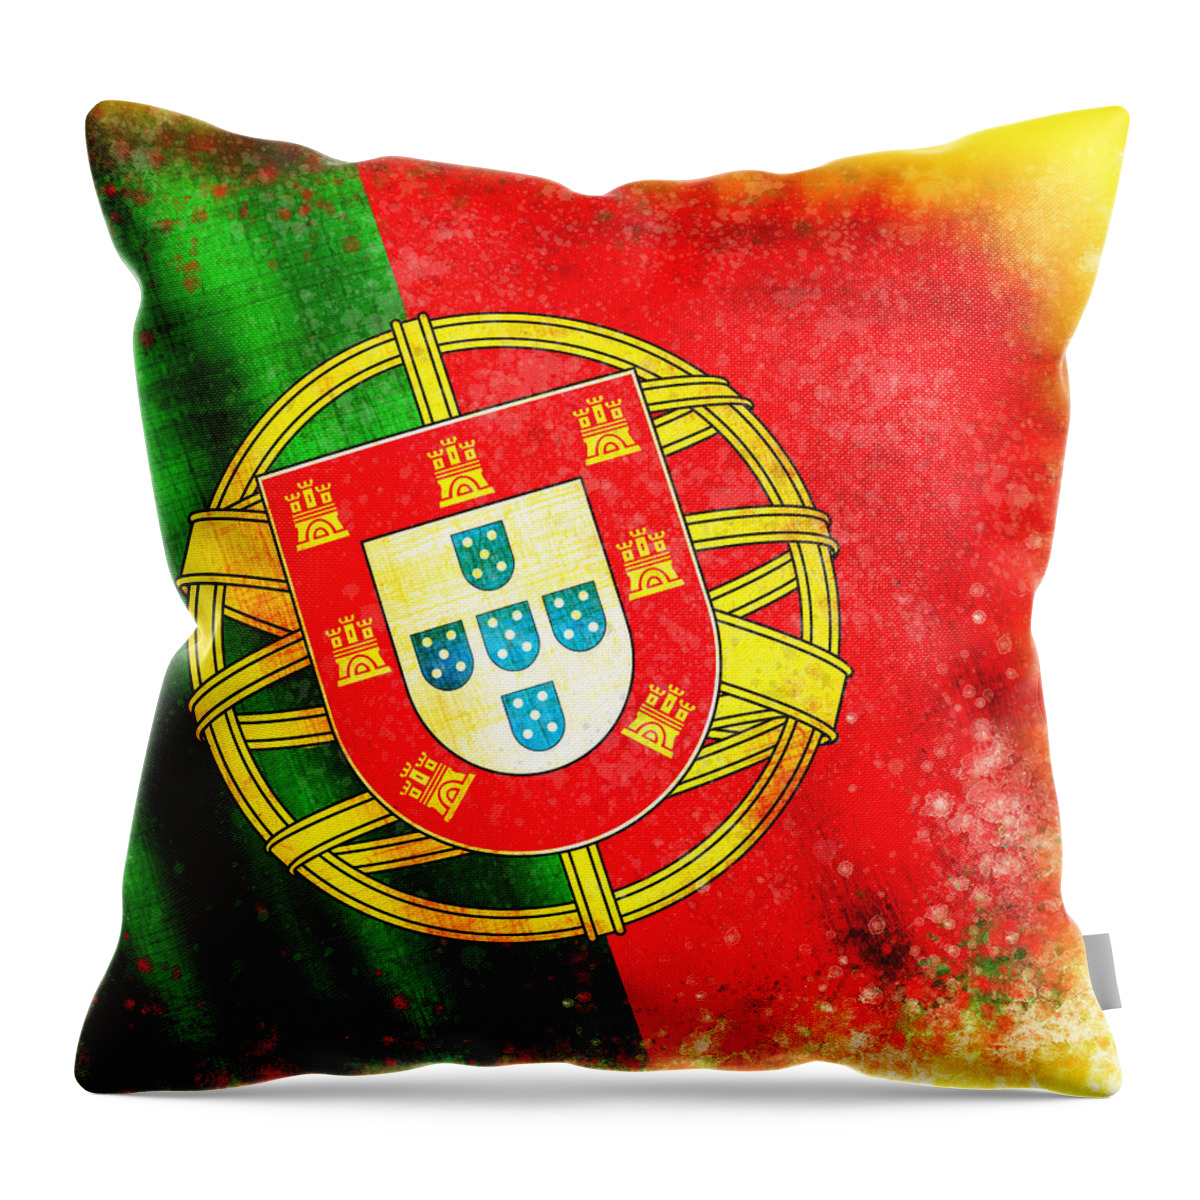 Chalk Throw Pillow featuring the painting Portugal Flag by Setsiri Silapasuwanchai